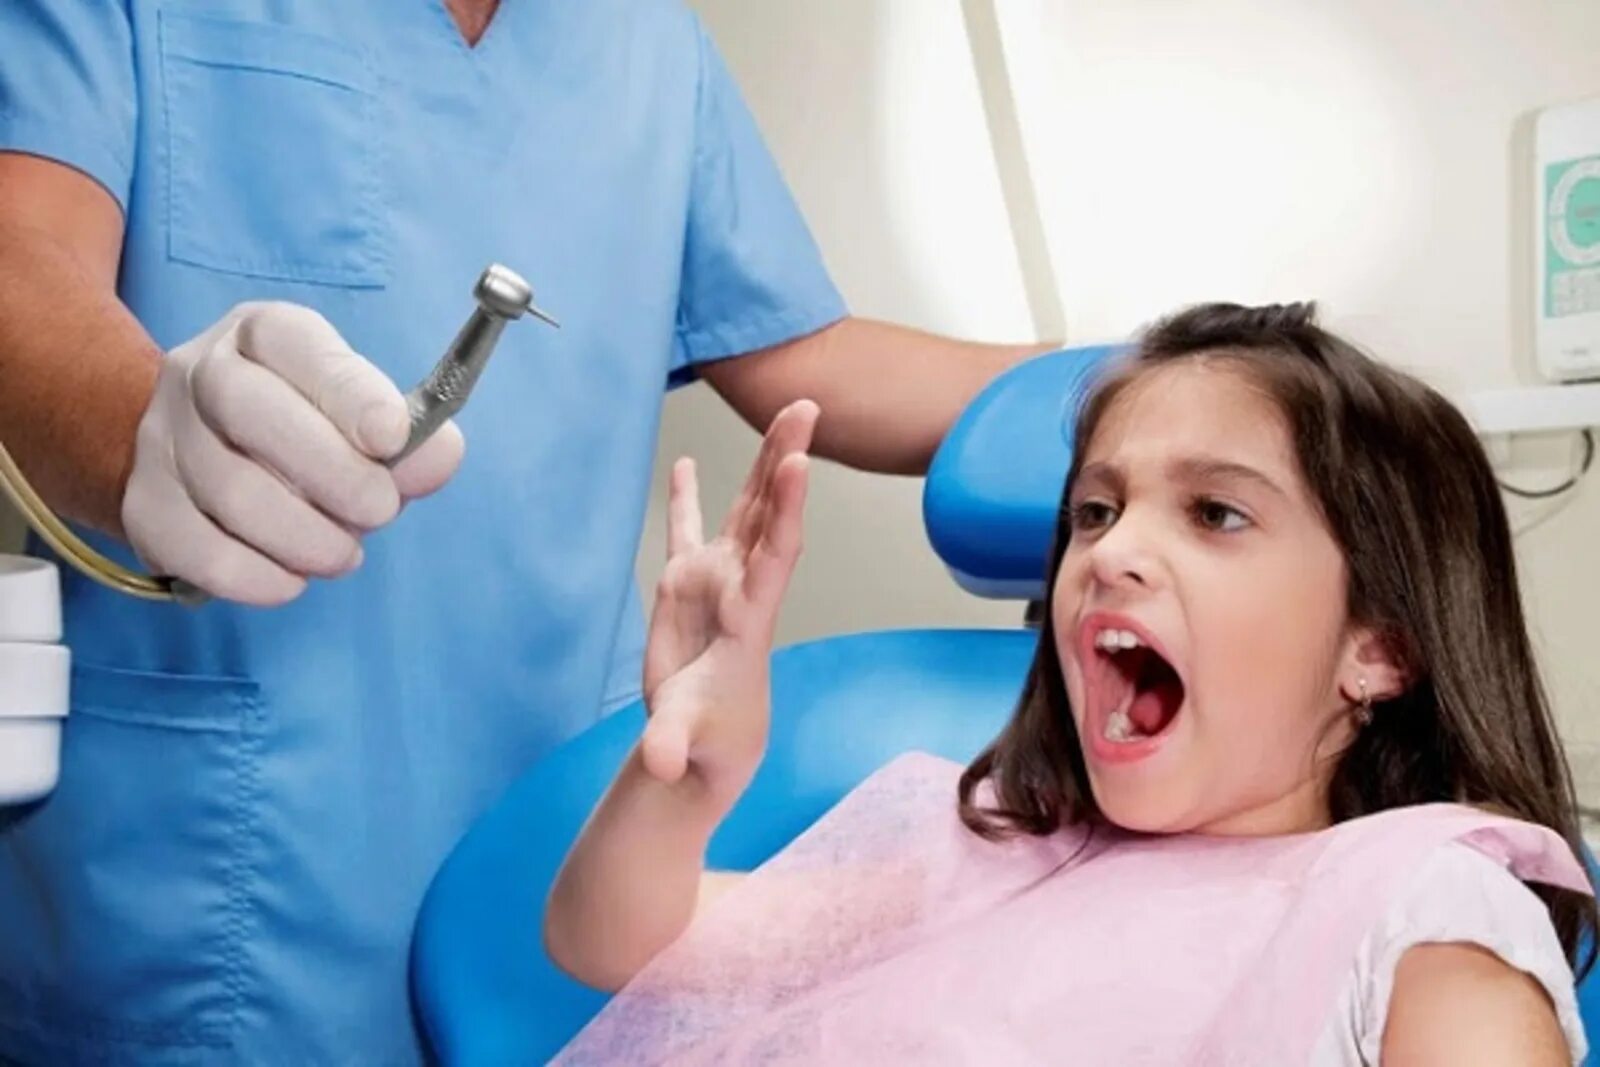 Врач напугать ребенка. Ребенок плачет у стоматолога. Ребенок у стоматолога. Страх перед стоматологом.